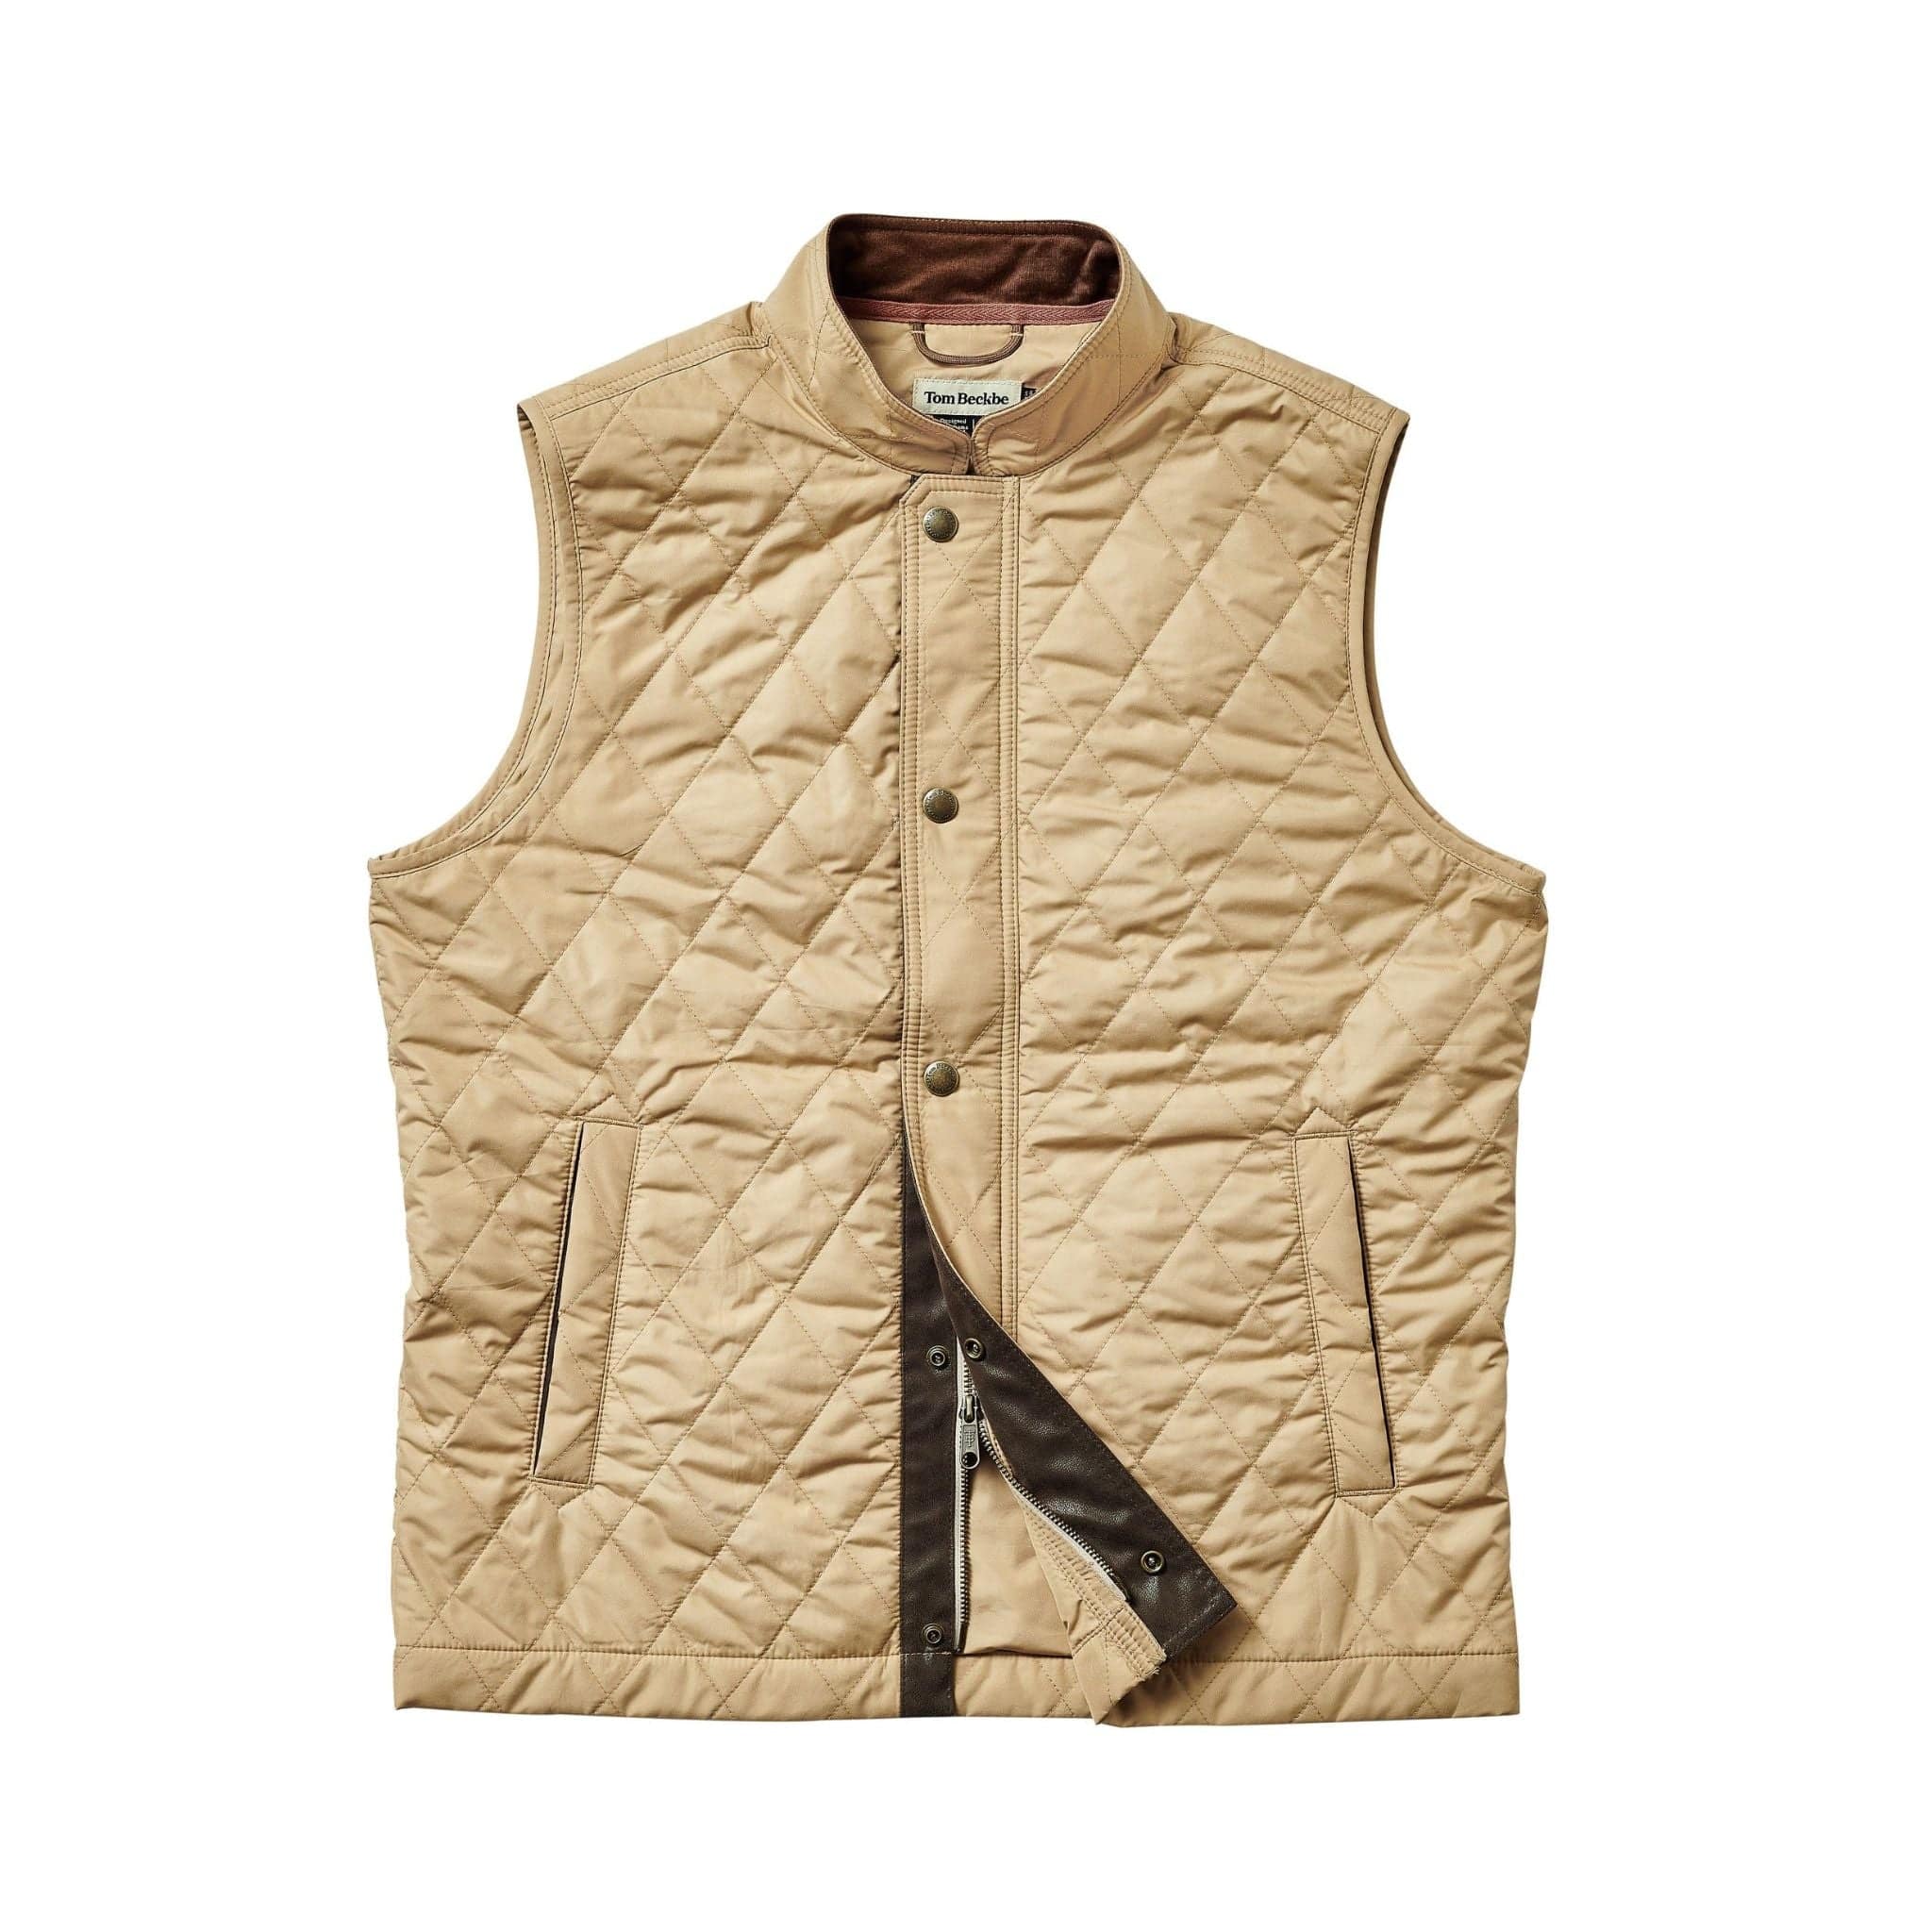 FILSON TOKYO STORE on Instagram: A warm, insulated vest built